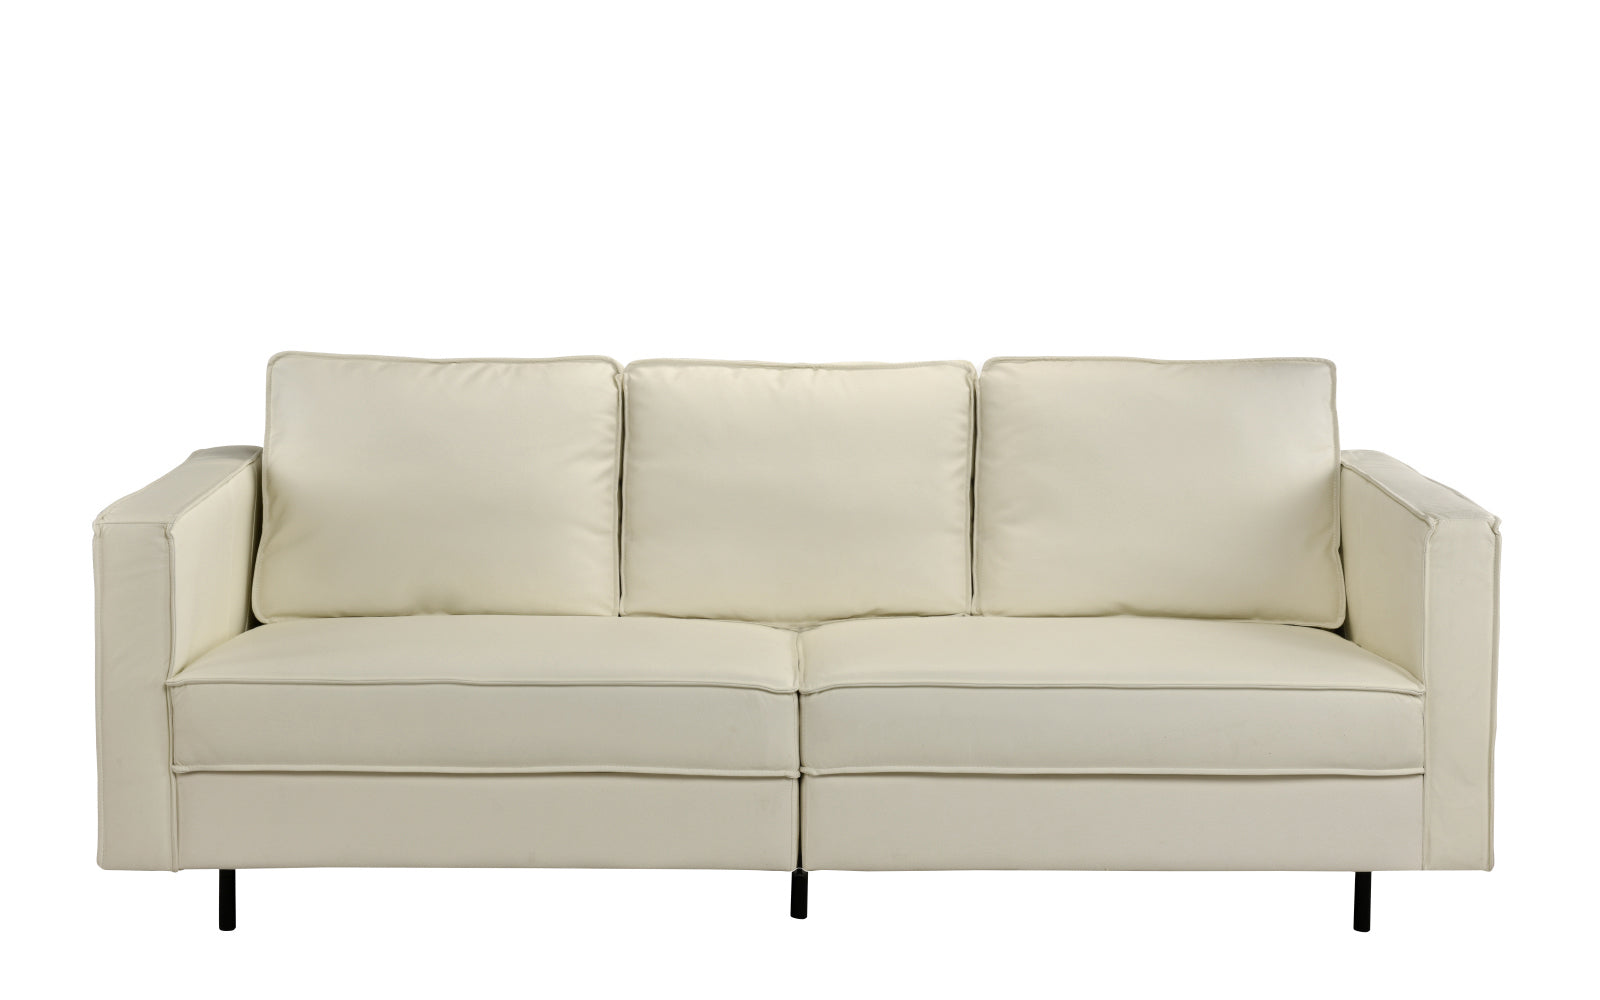 Bonte California Original Mid Century Modern Leather Match Sofa